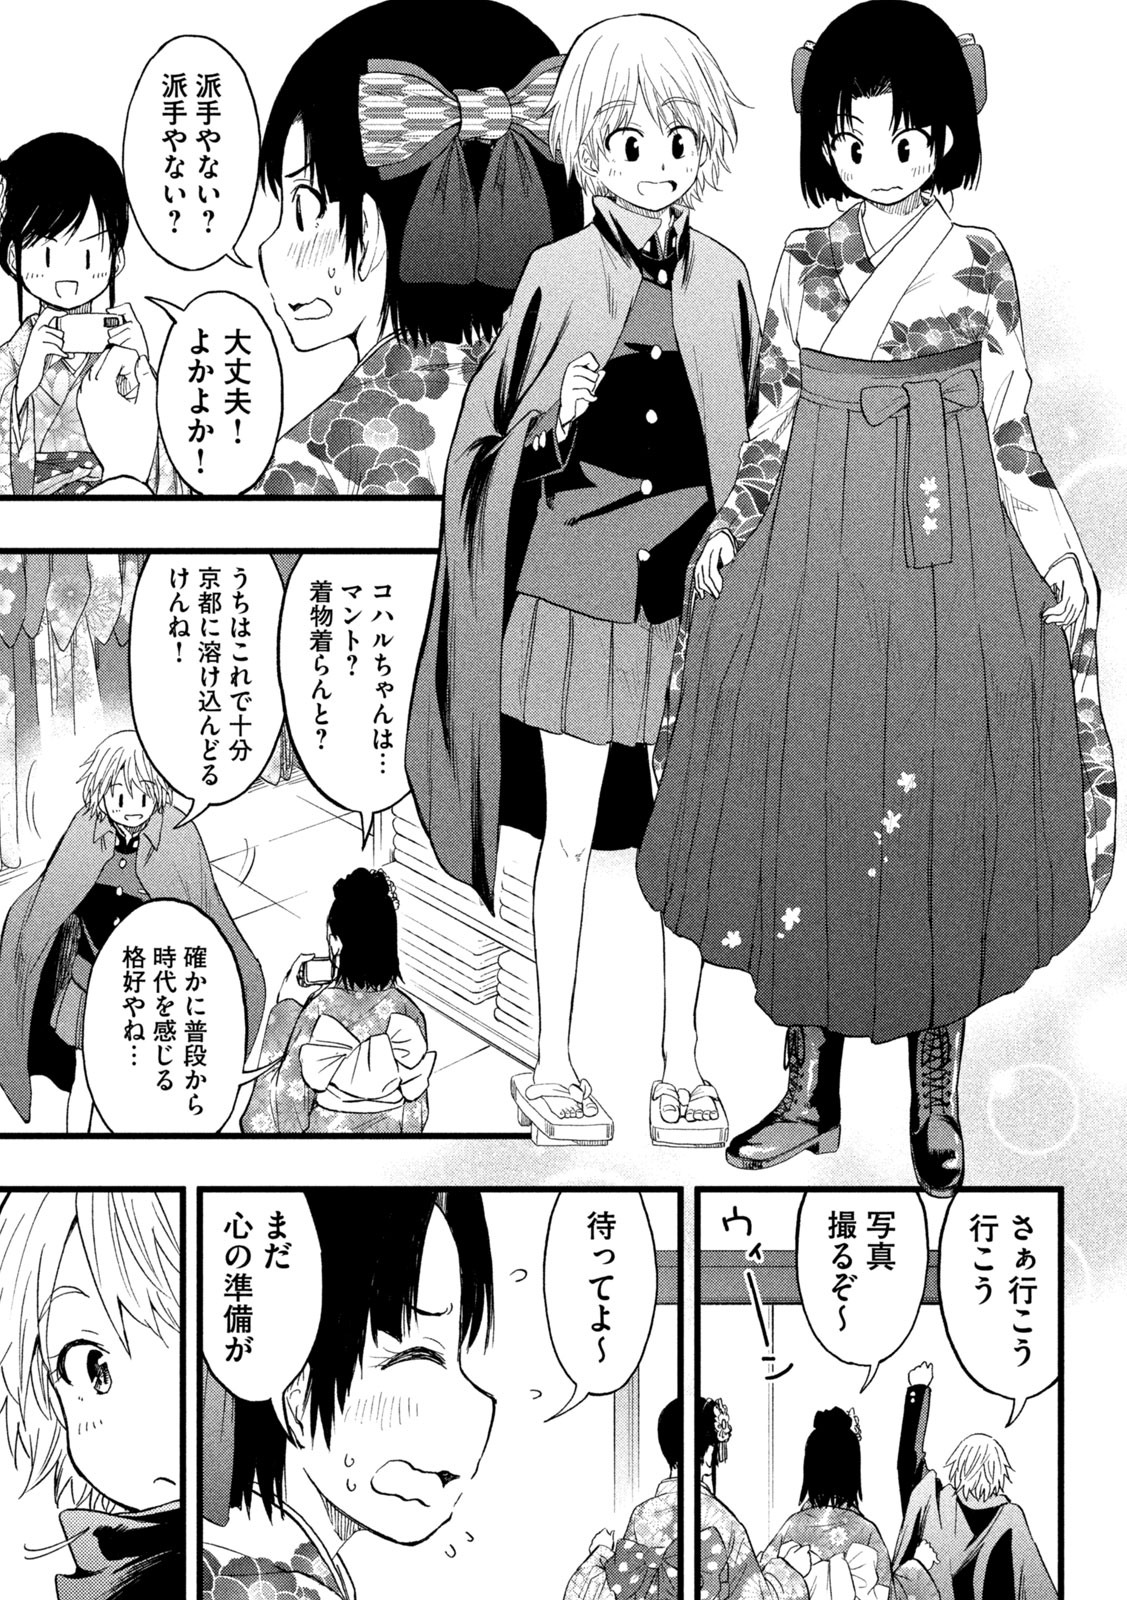 Koharu haru! - Chapter 68 - Page 3